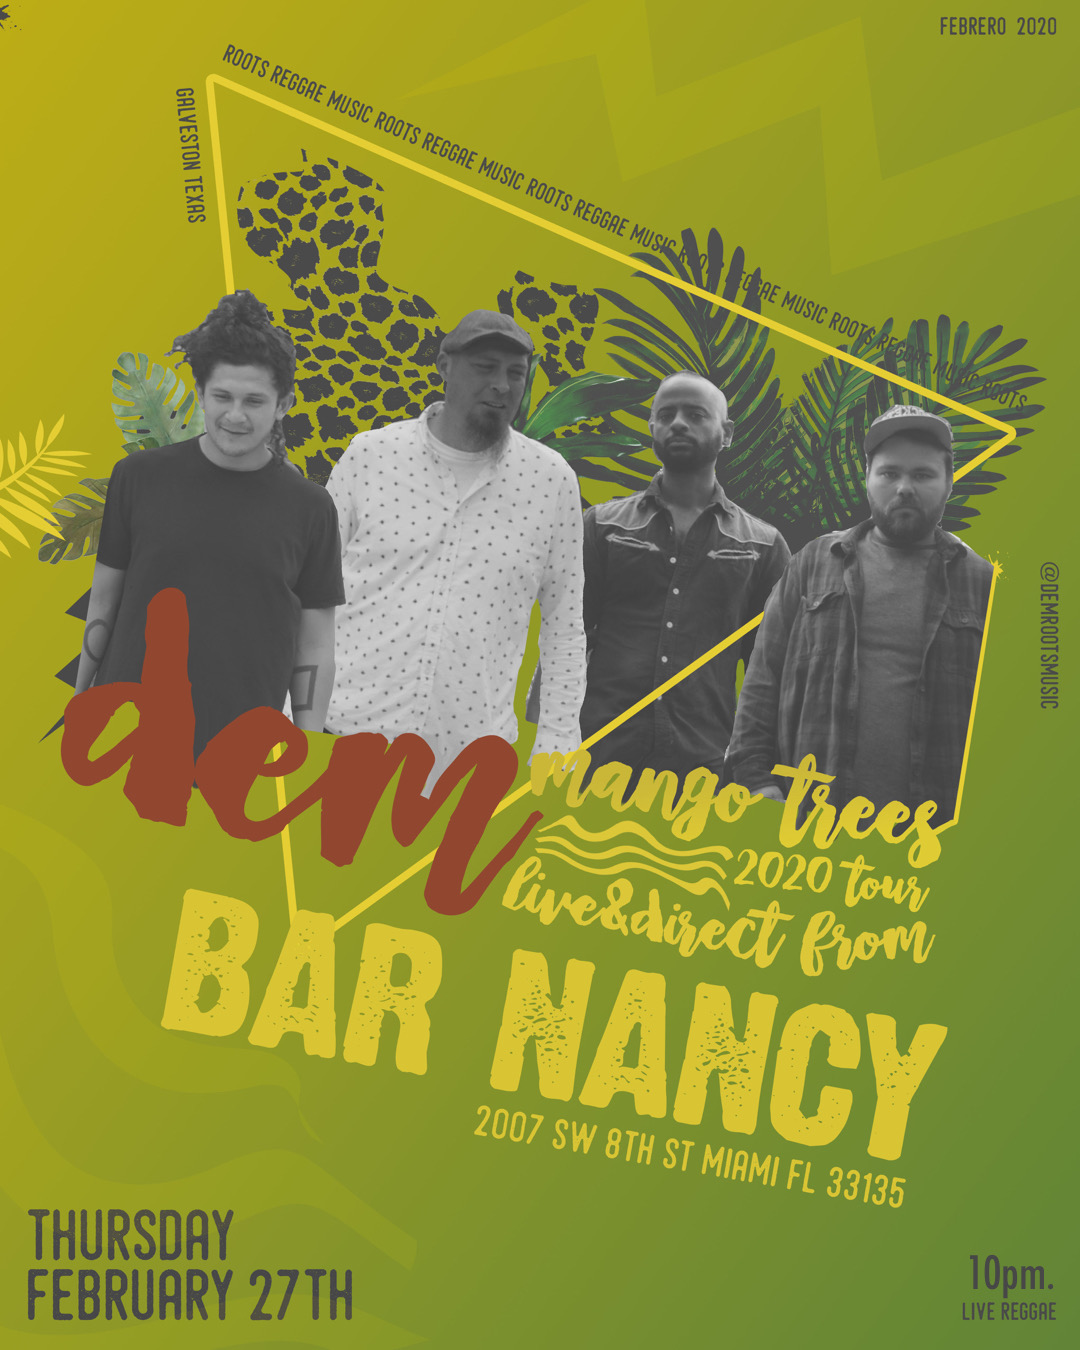 Dem at Bar Nancy - Thursday, February 27, 2020 at 8 PM